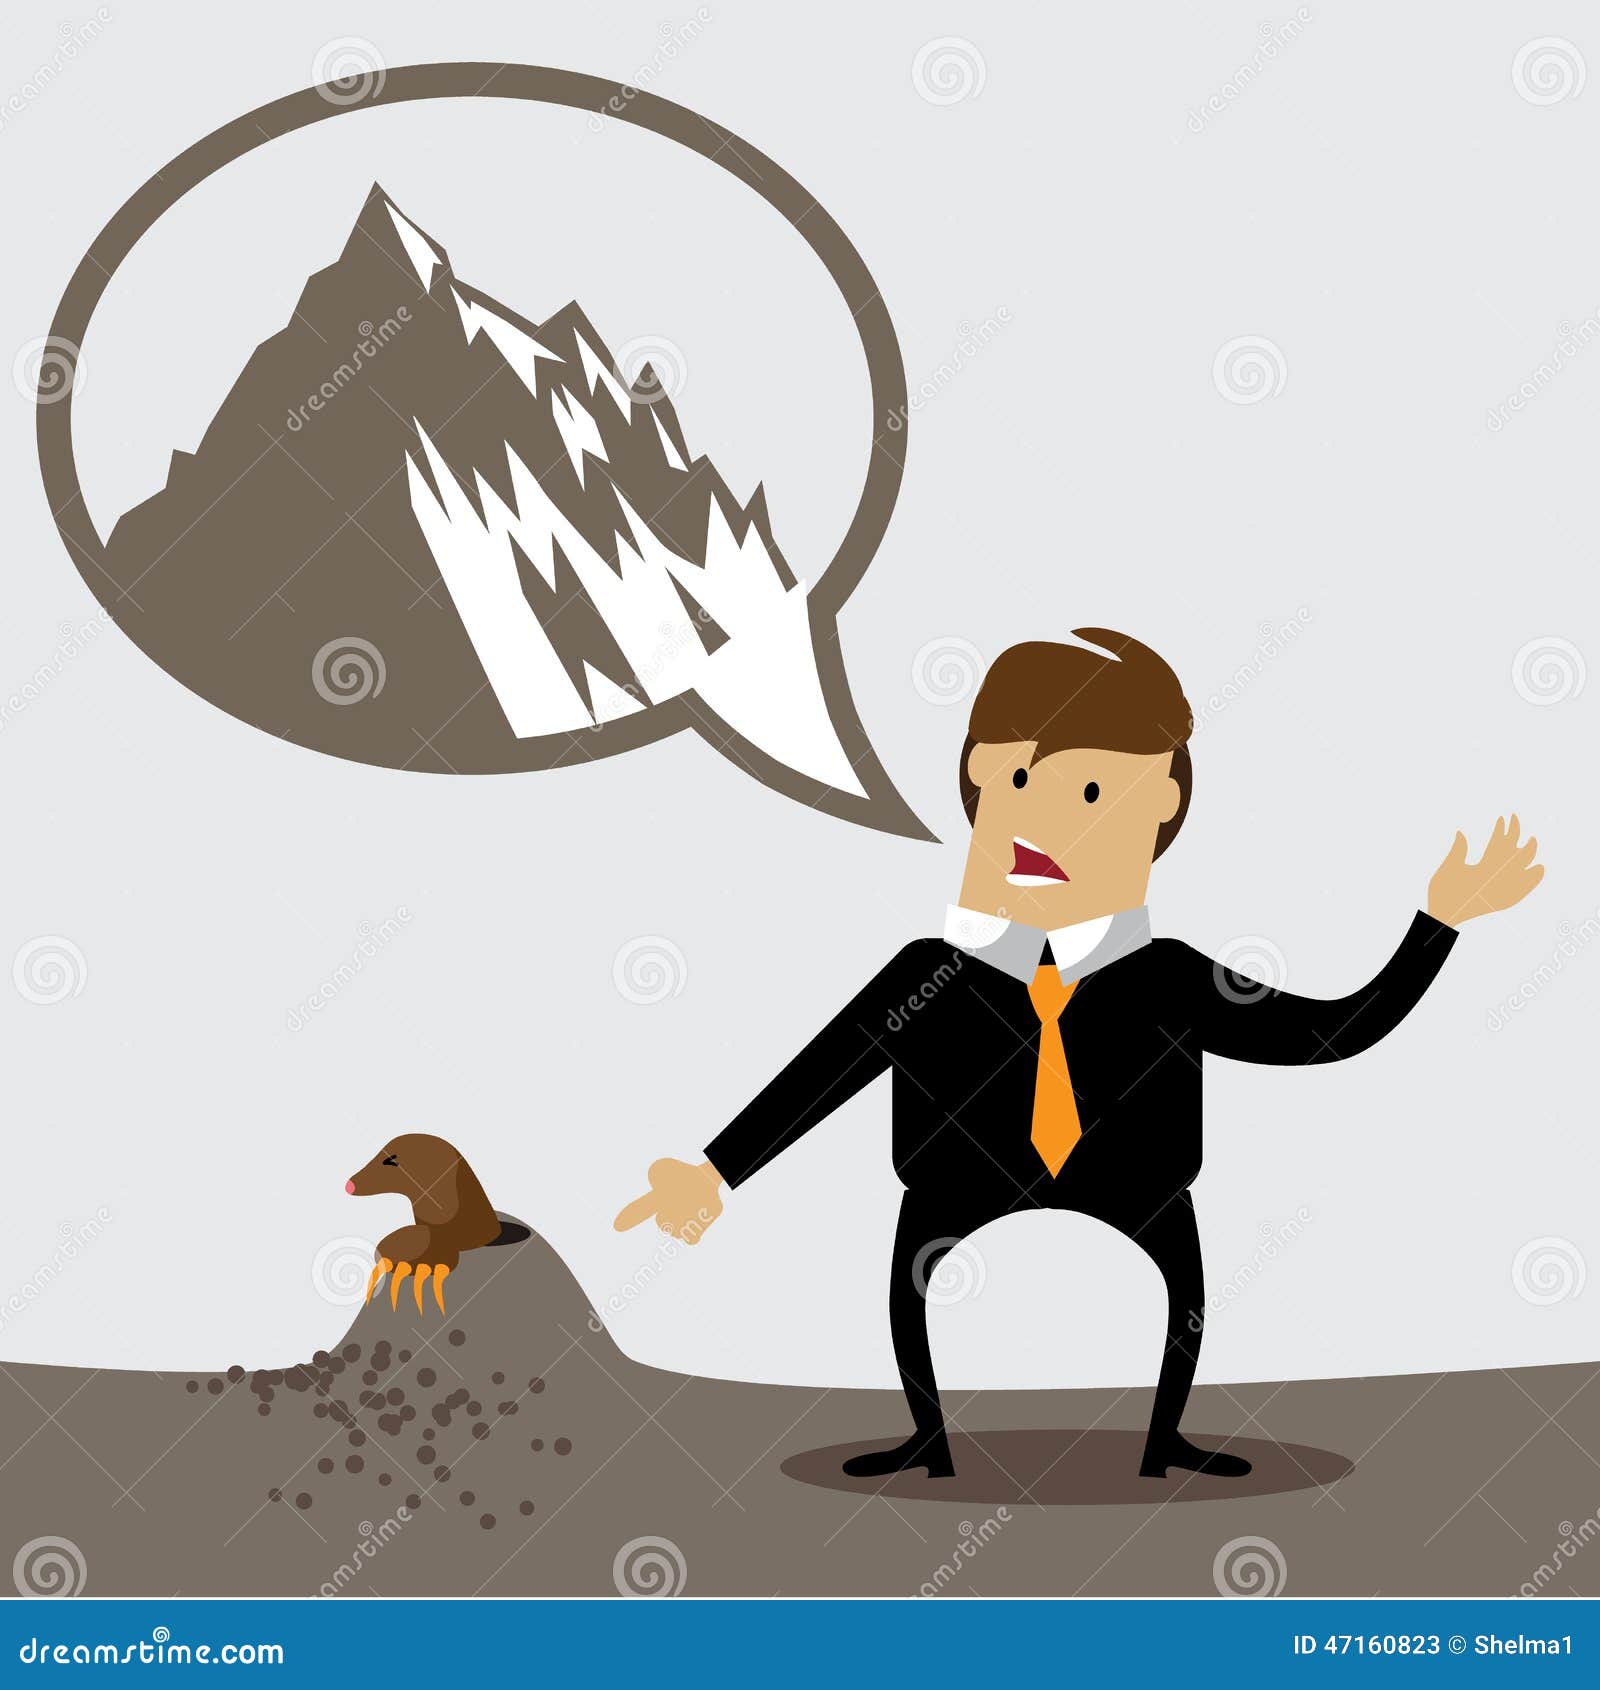 man-making-mountain-out-molehill-eps-vector-illustration-47160823.jpg